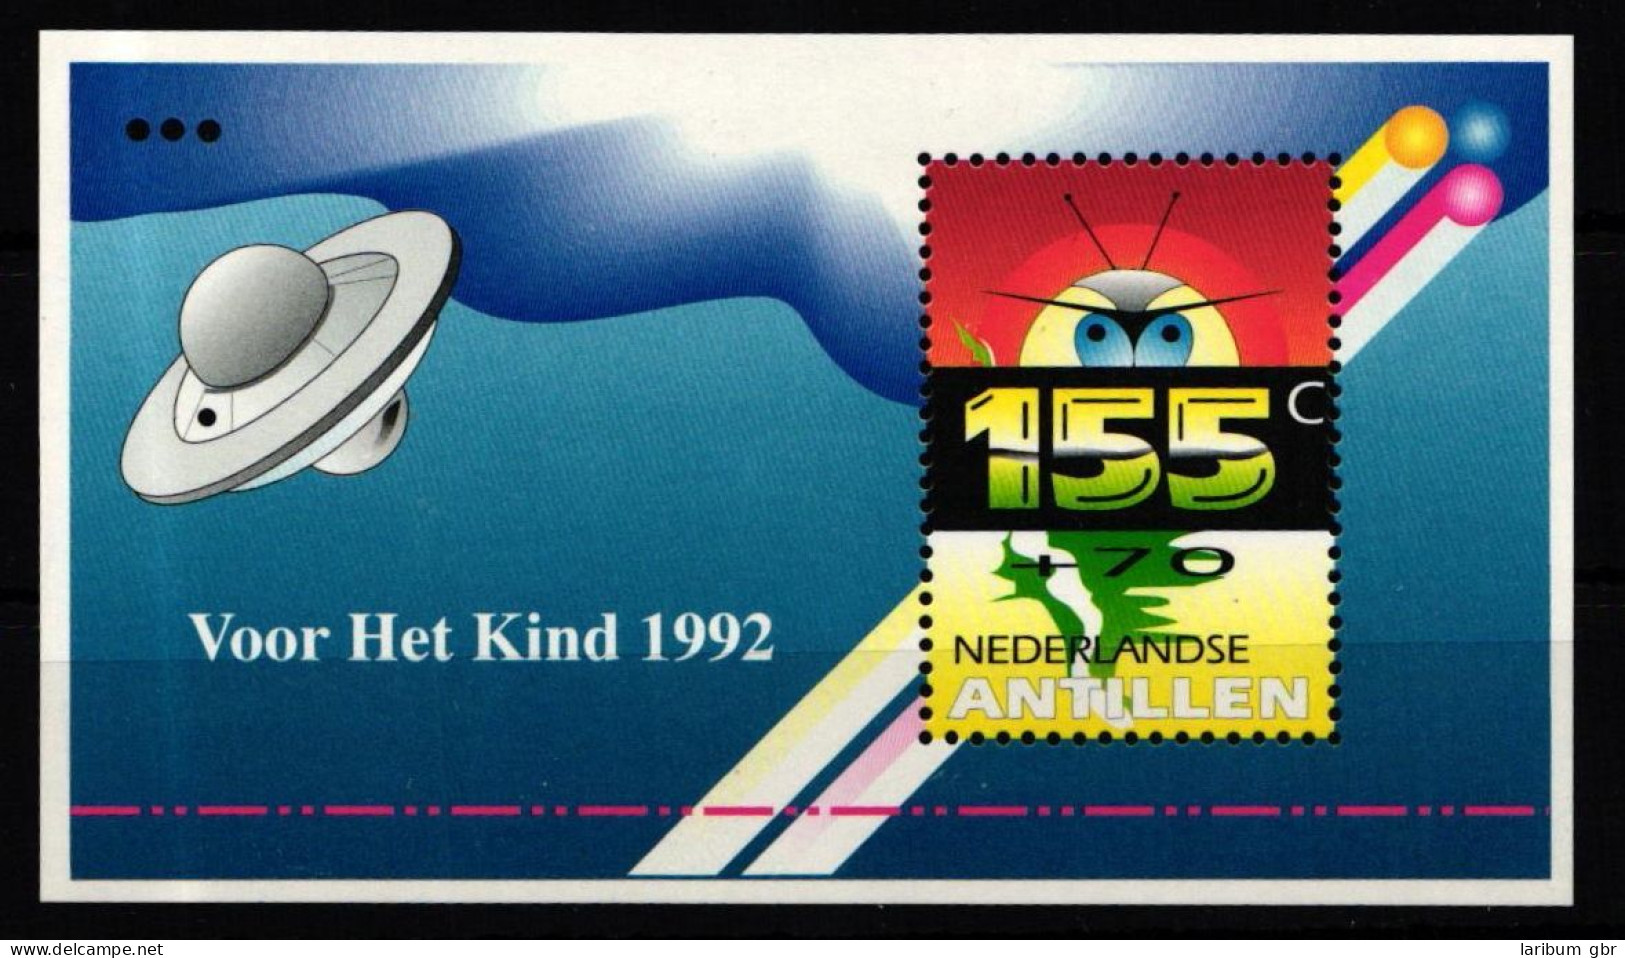 Niederländische Antillen Block 39 Postfrisch #KJ913 - Curacao, Netherlands Antilles, Aruba